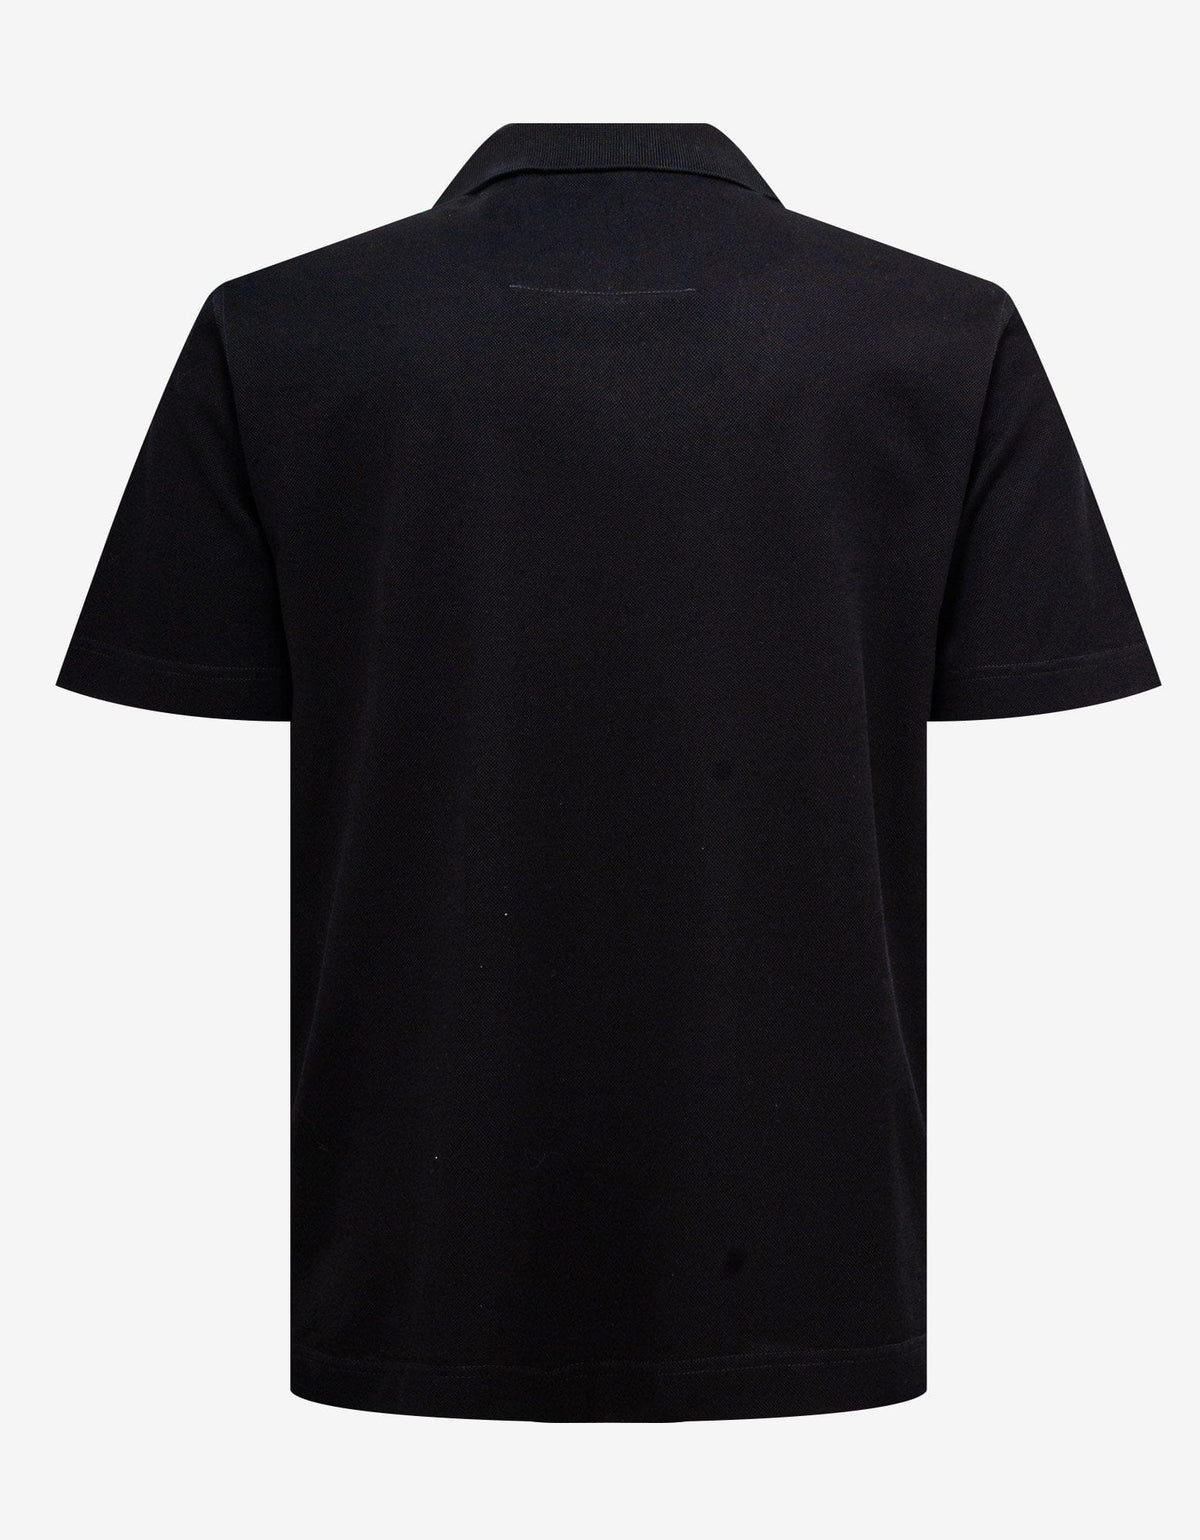 Givenchy Black Archetype Zipped Polo T-Shirt